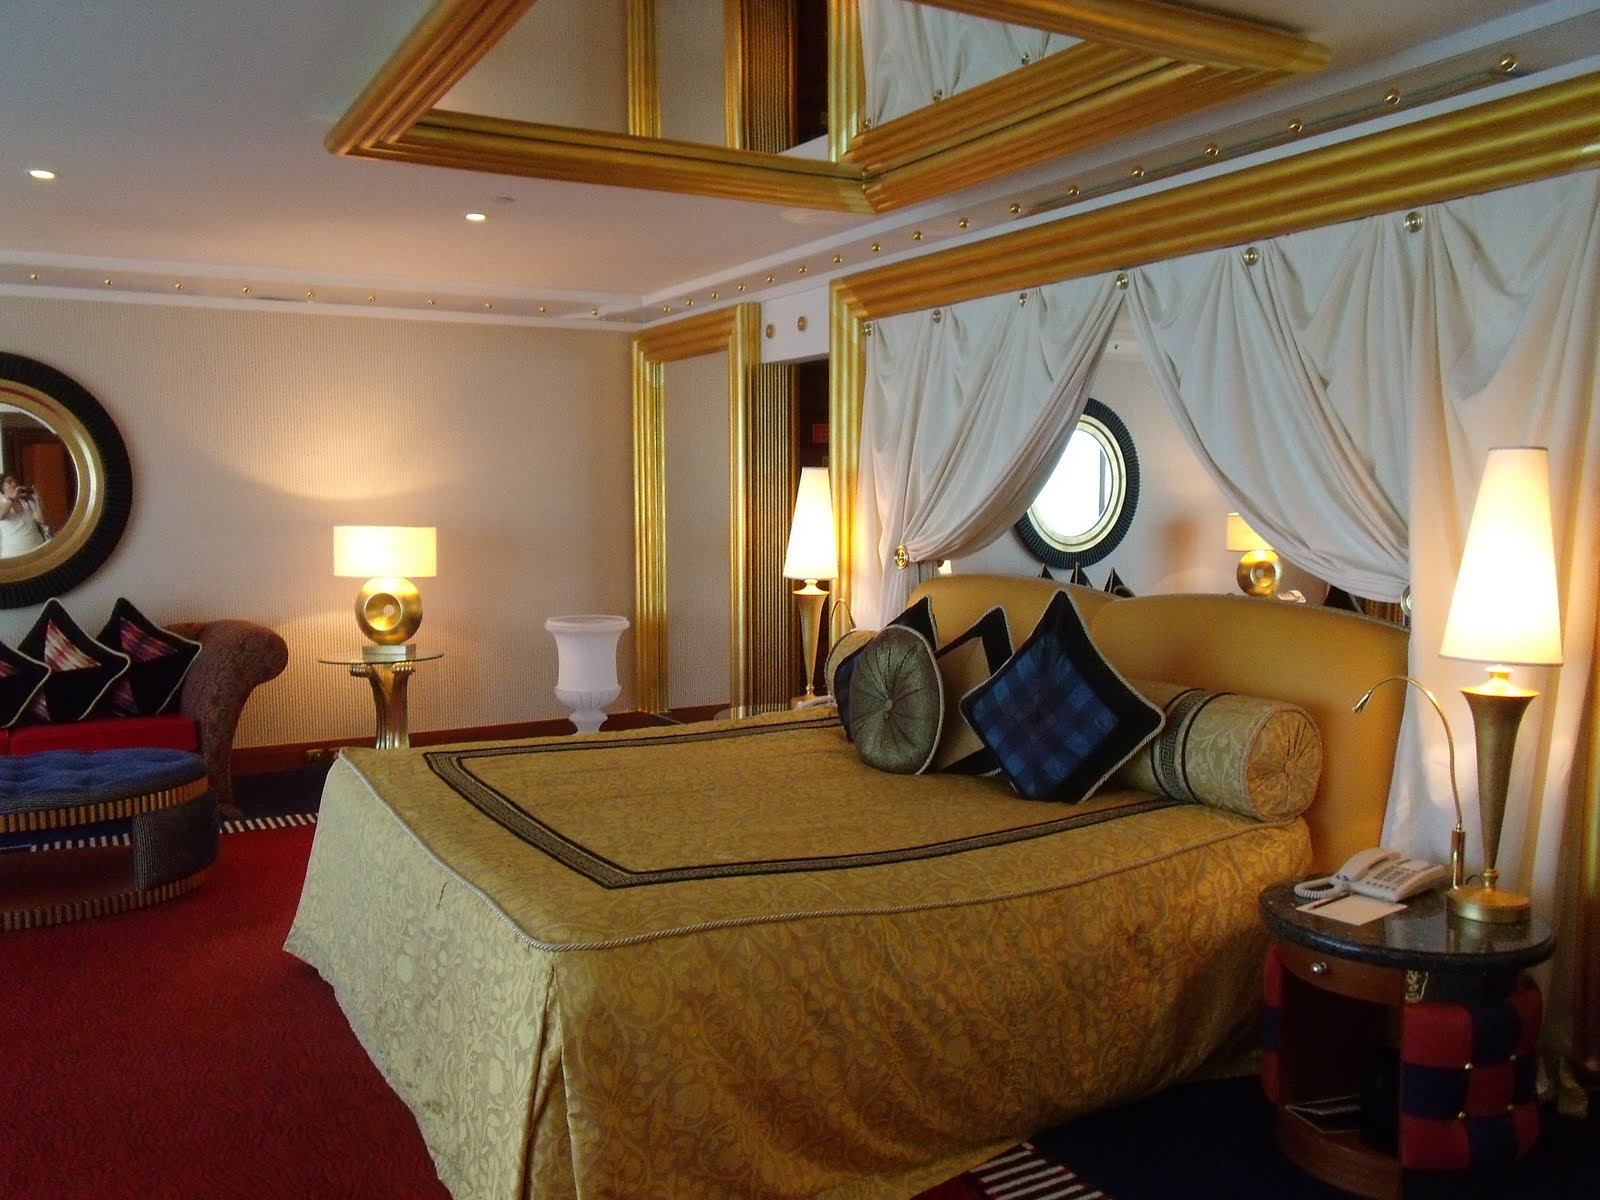 Tamsin & Cooke: Burj Al Arab 2 bedroom master suite